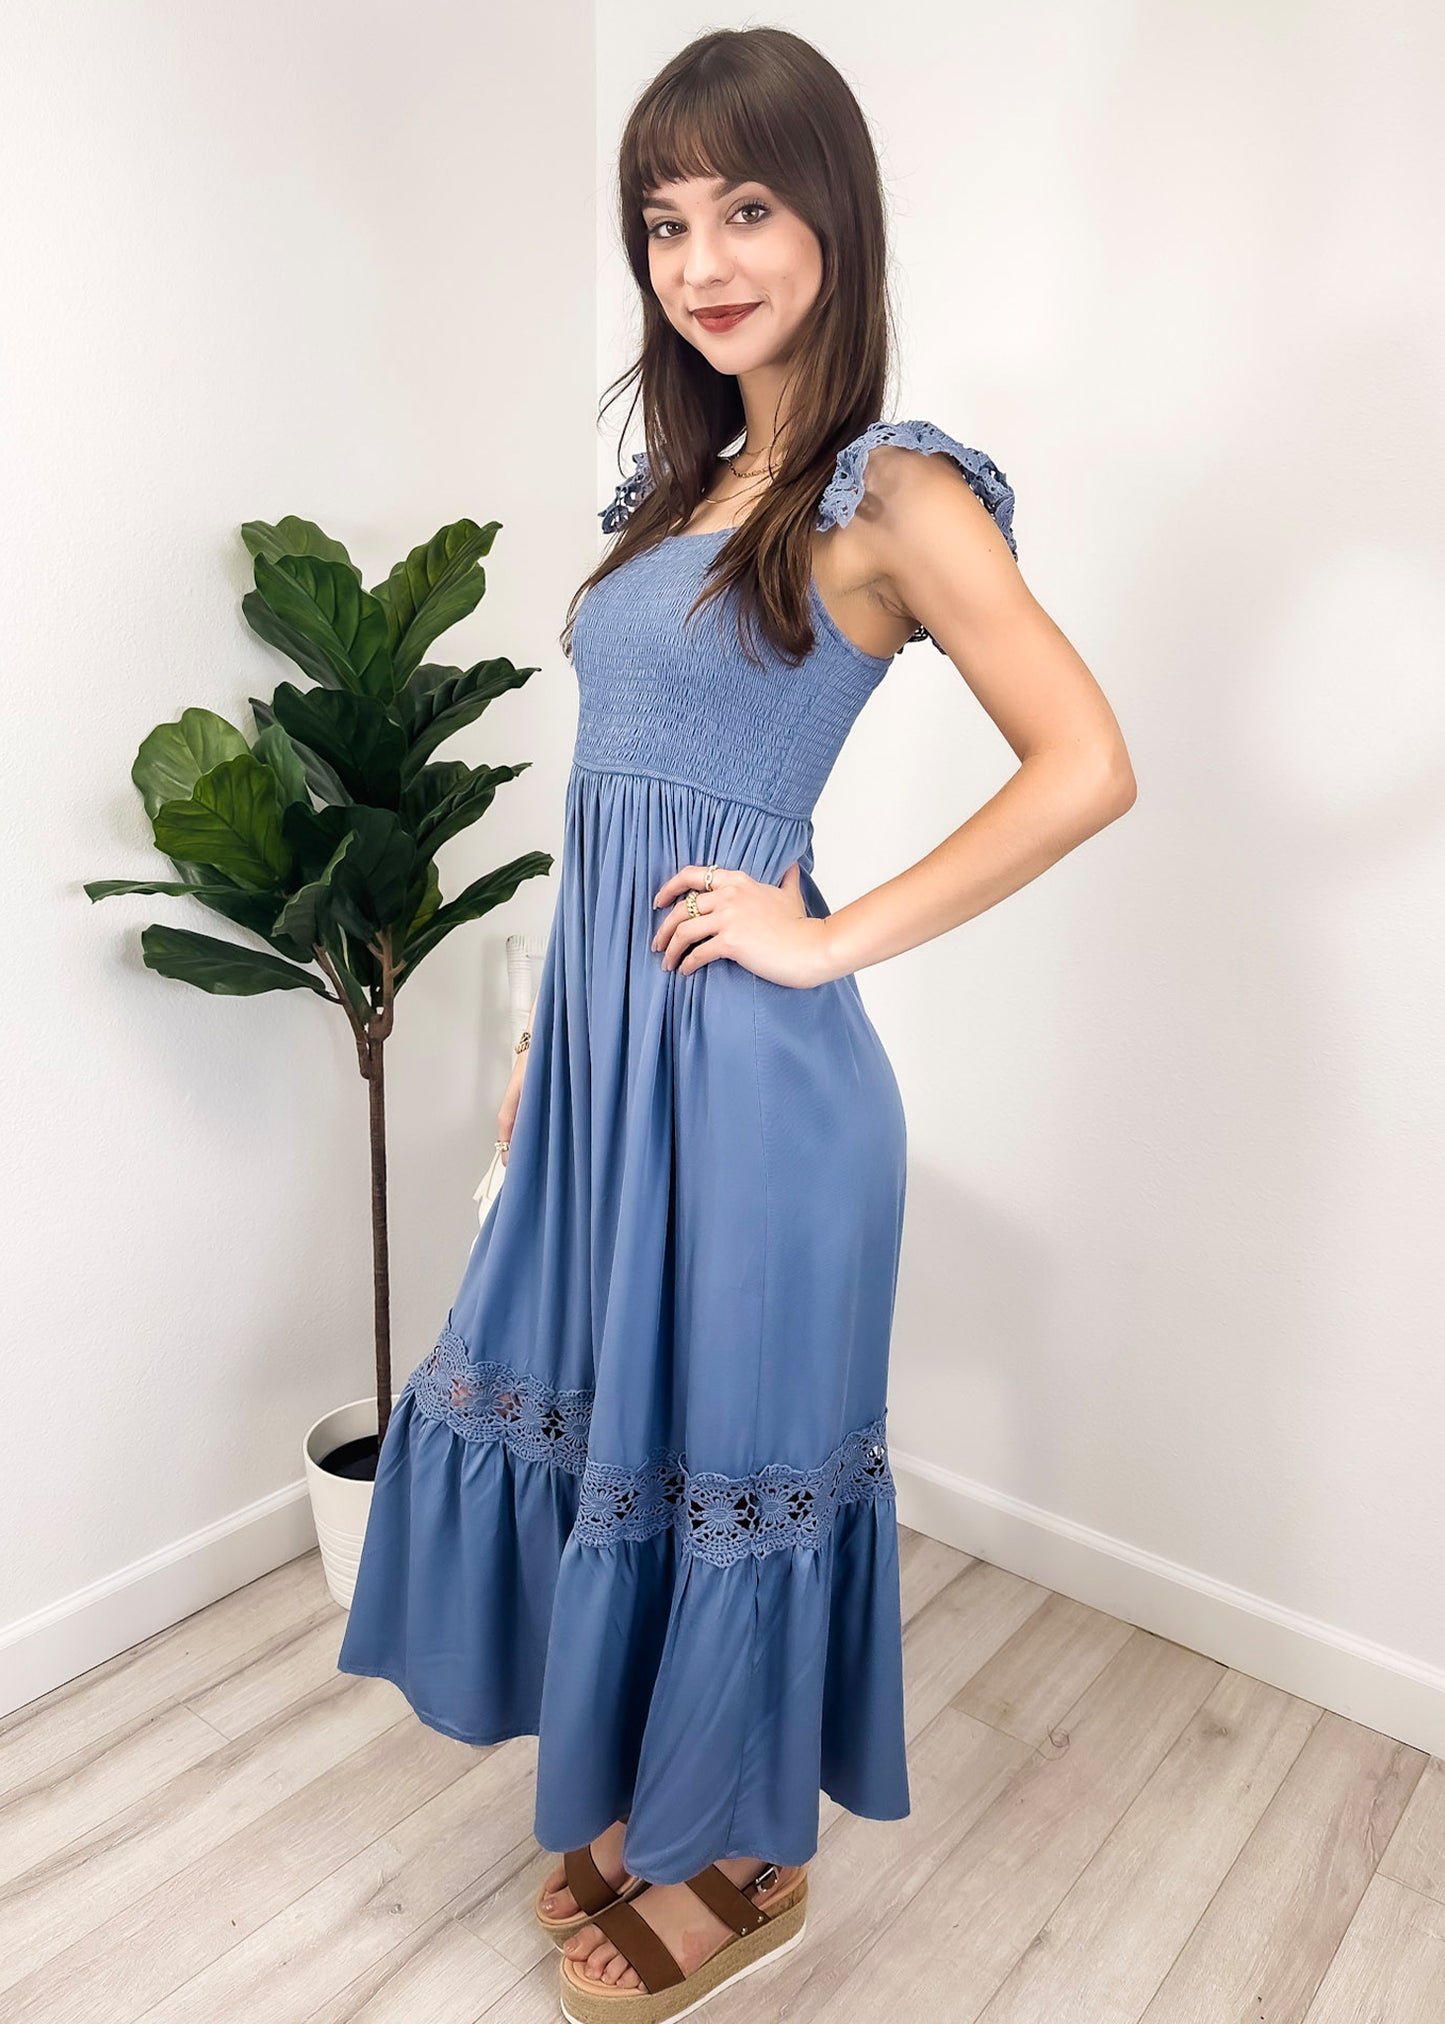 Anna-Kaci Womens Summer Boho Lace Strap Sleeveless Dress Flowy Ruffle Beach Party Maxi Dress